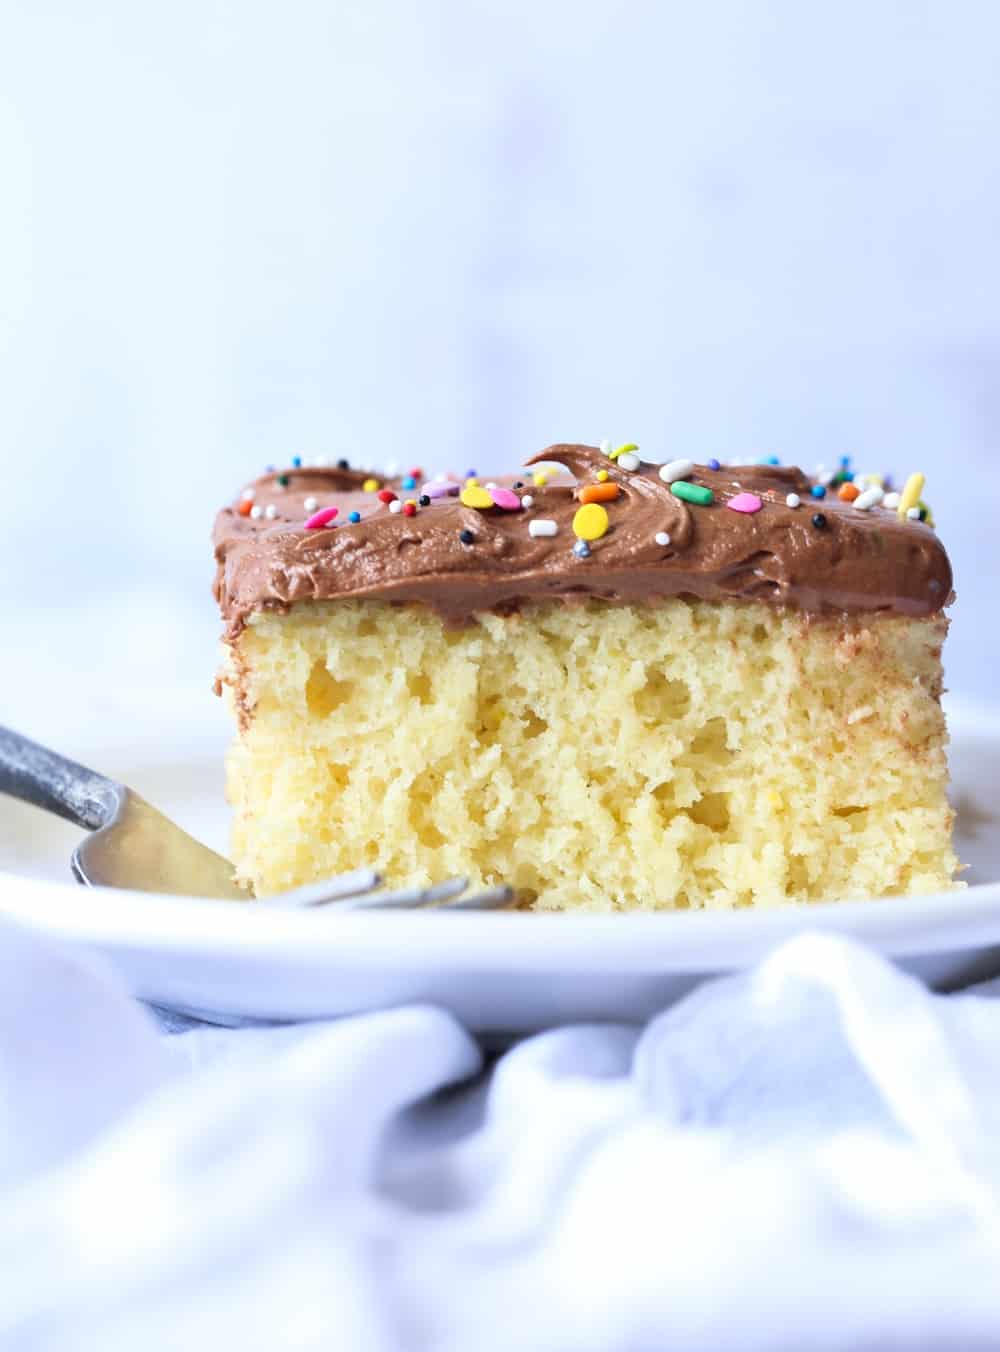 Homemade Cake Mix Recipe Vanilla And Chocolate Variations,Banana Flower Food